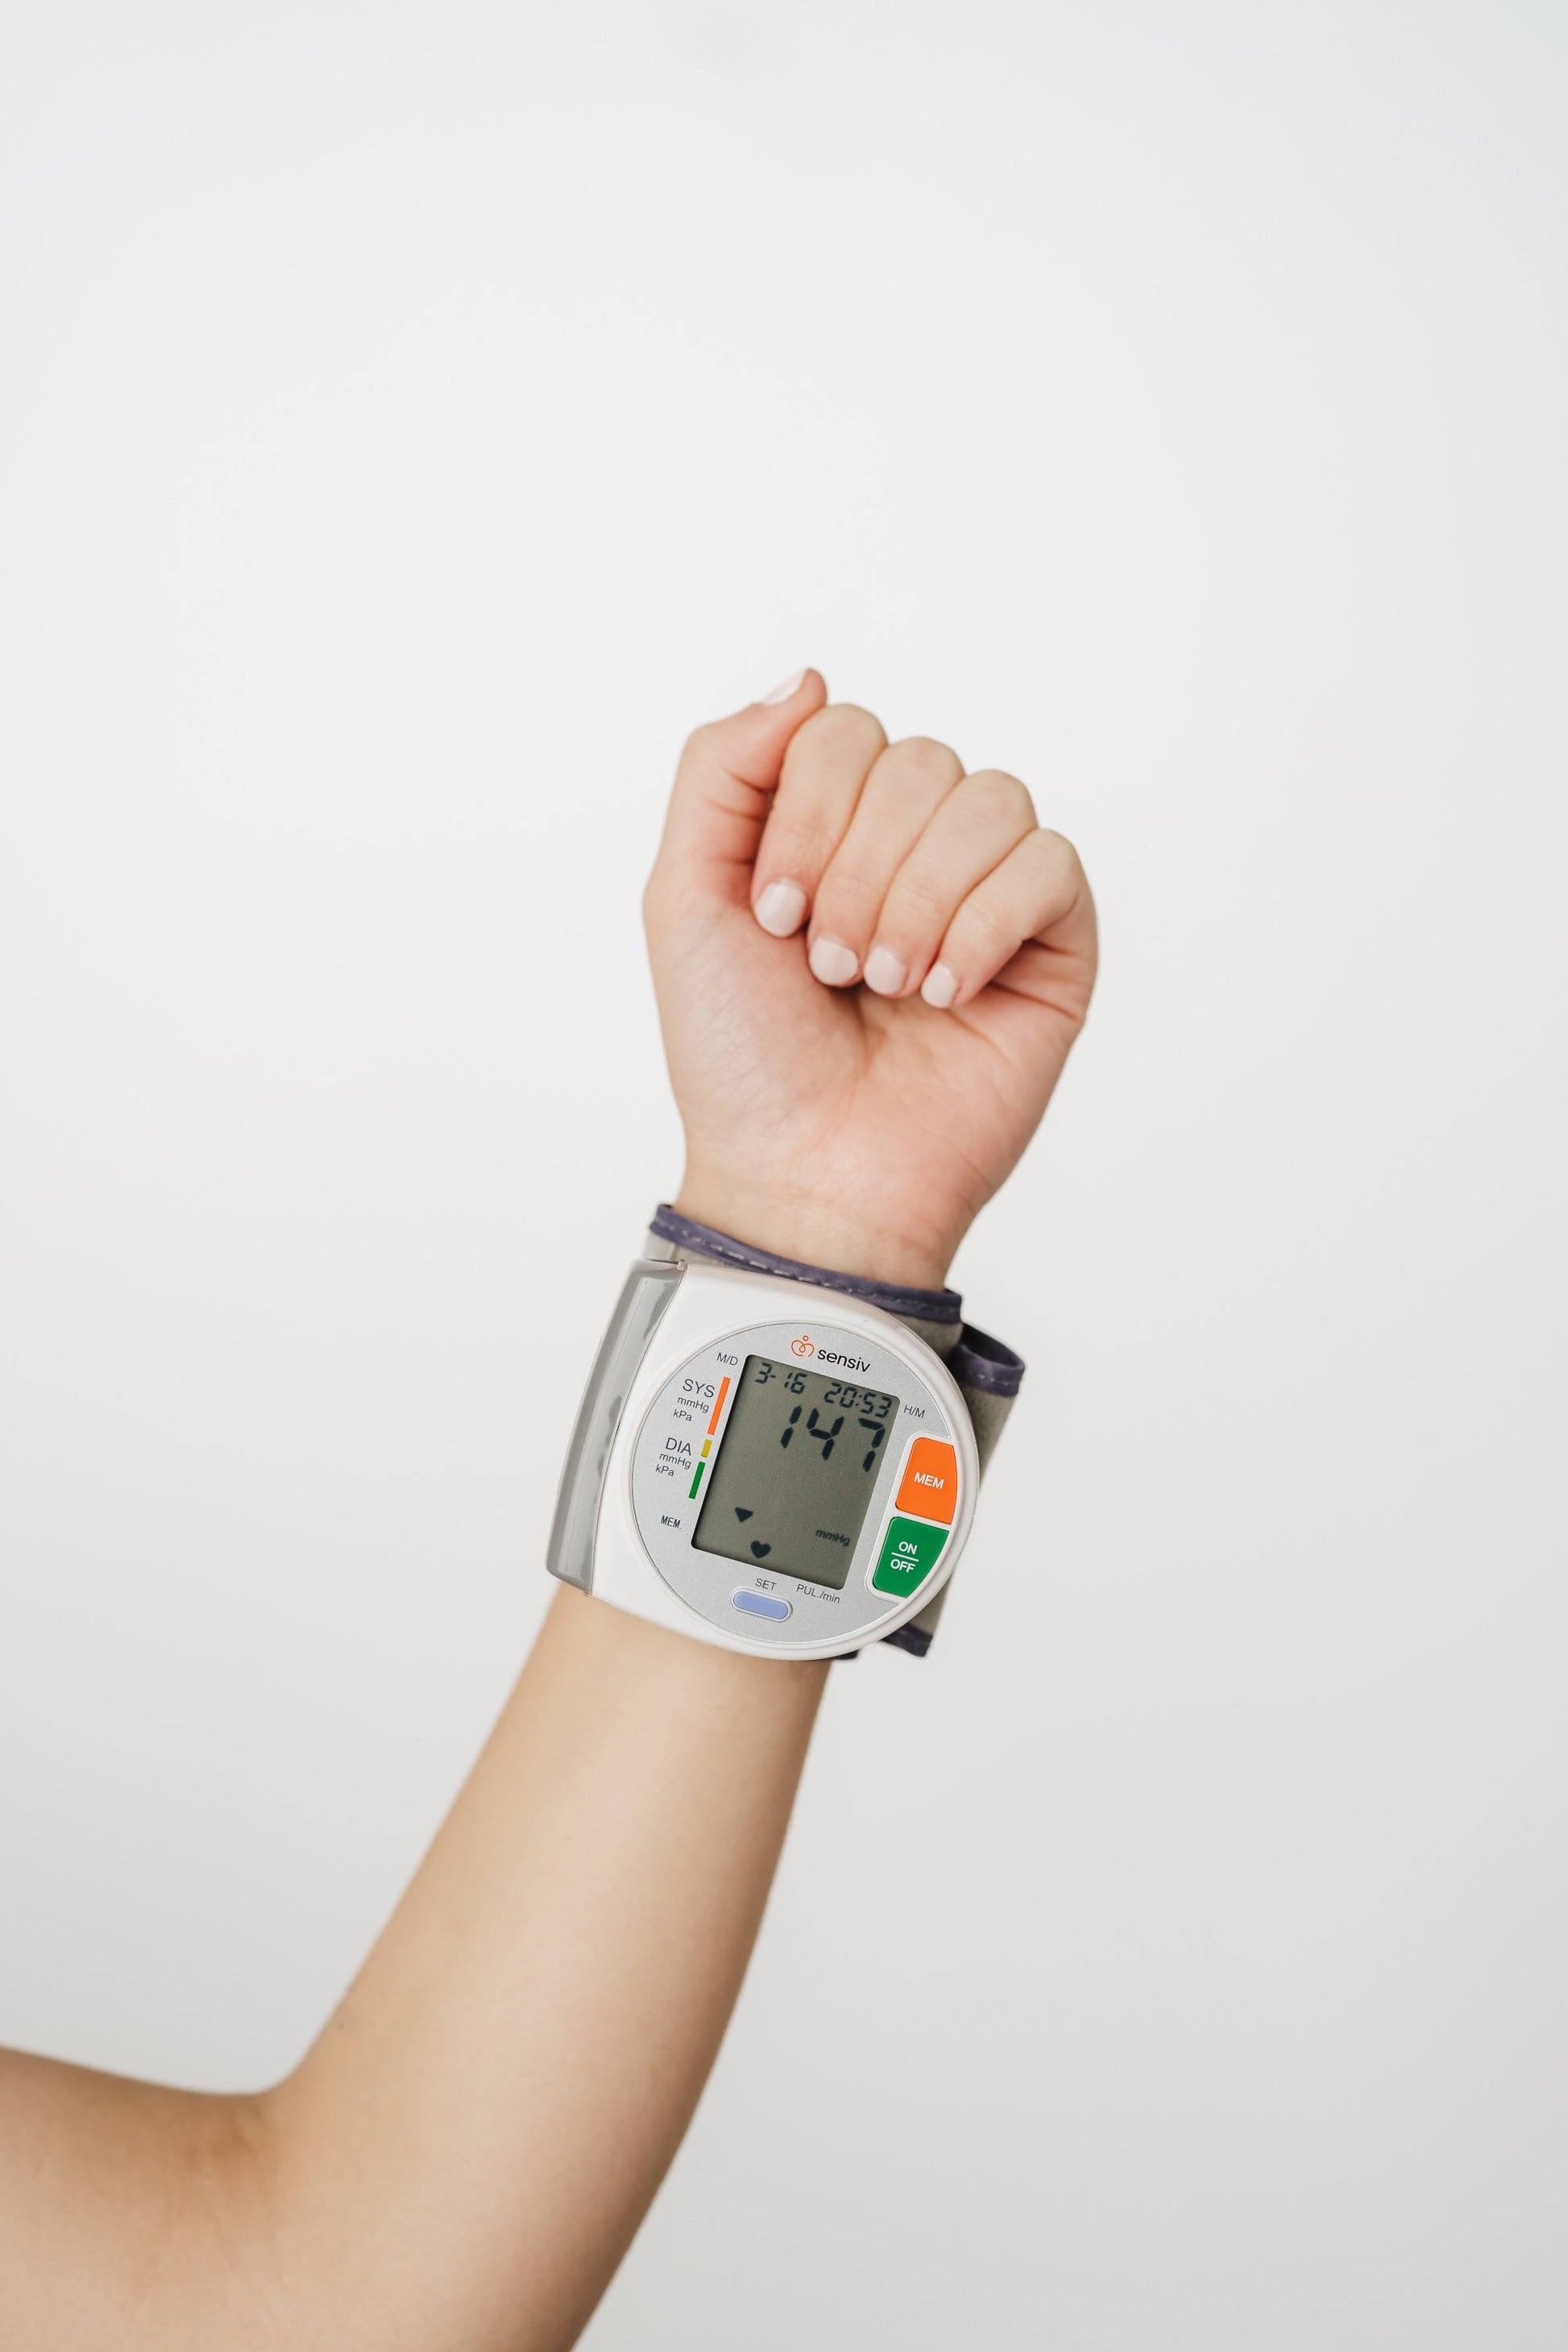 ADC Advantage 6015N Automatic Digital Wrist Blood Pressure Monitor